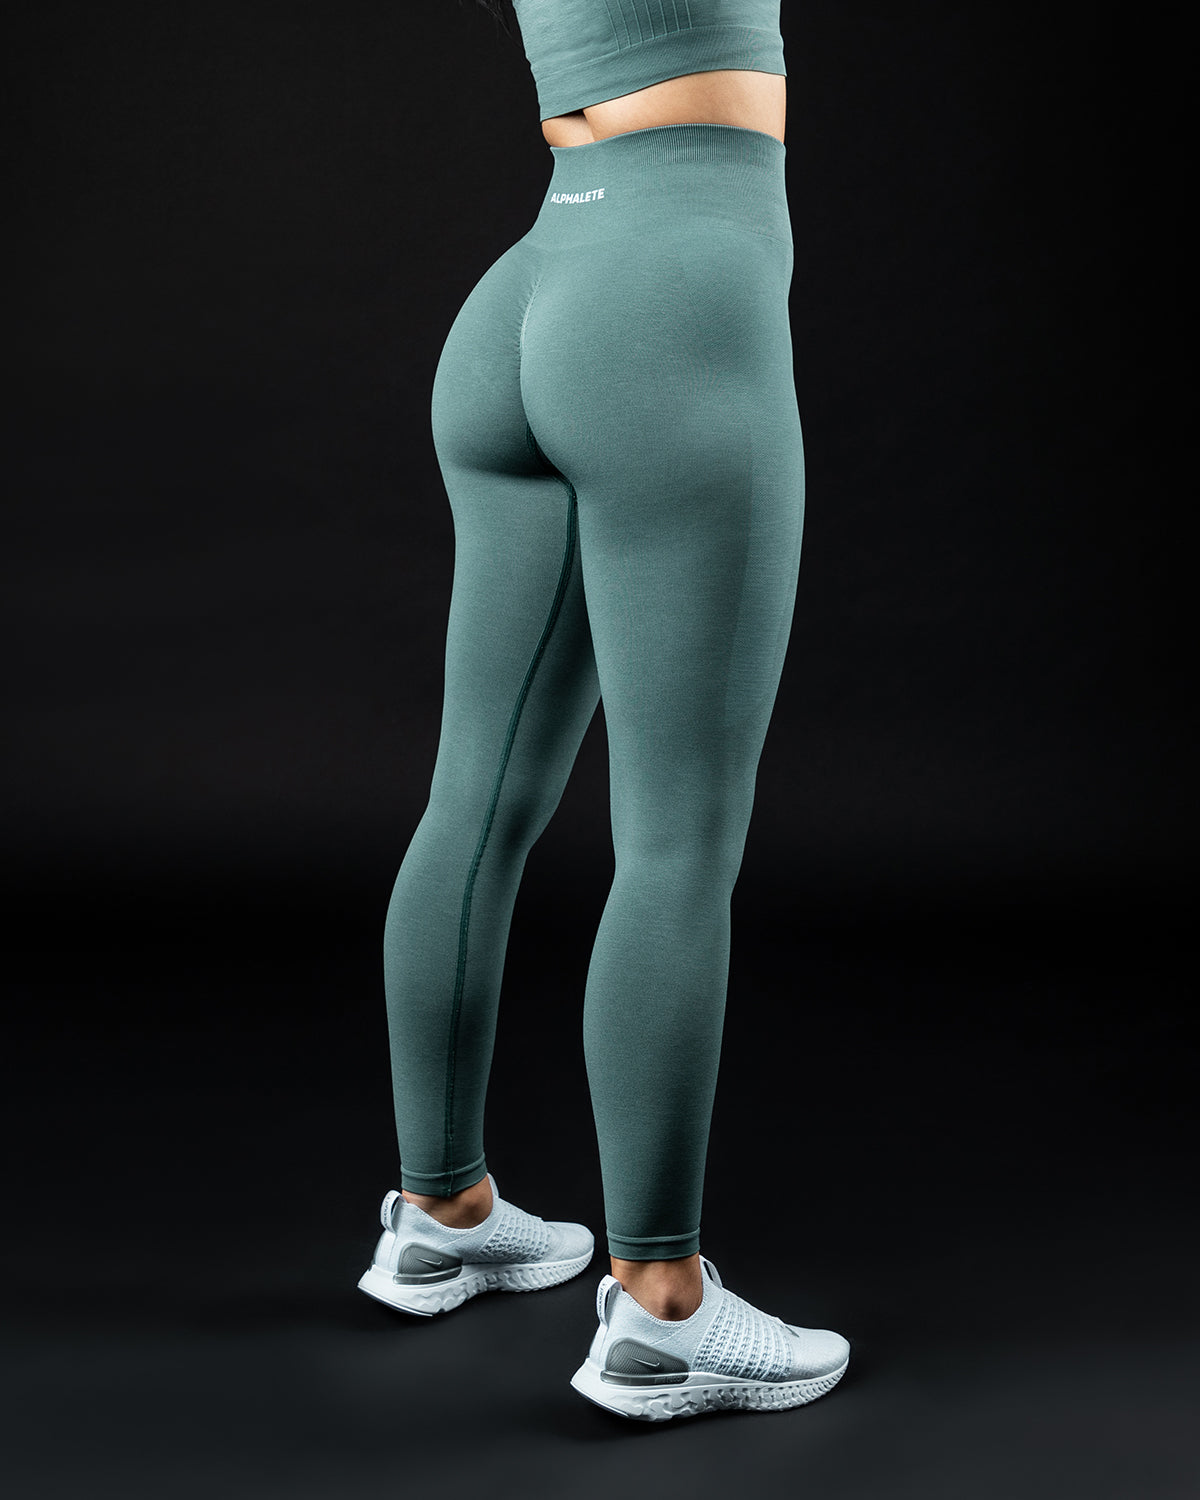 Alphalete amplify leggings - Athletic apparel